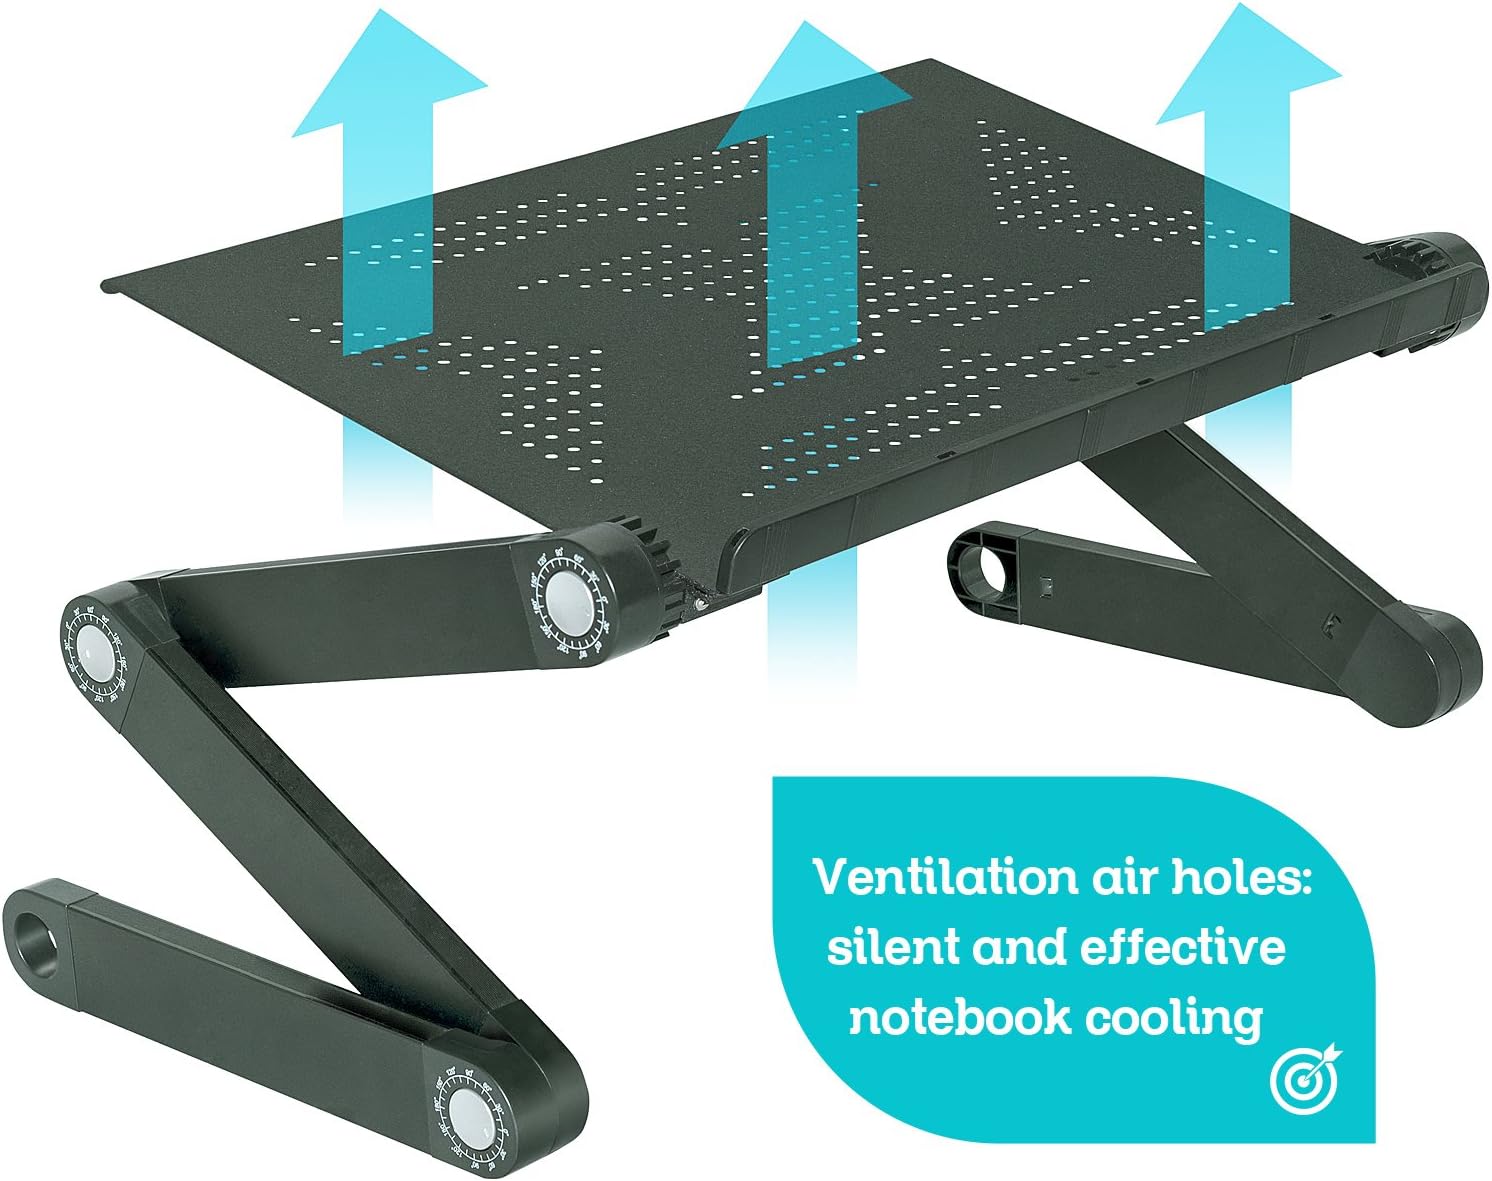 WonderWorker Newton Adjustable Laptop Table Bed Tray Cooling Pad, Lightweight Aluminum, Portable Folding Laptop Stand, Black Standard